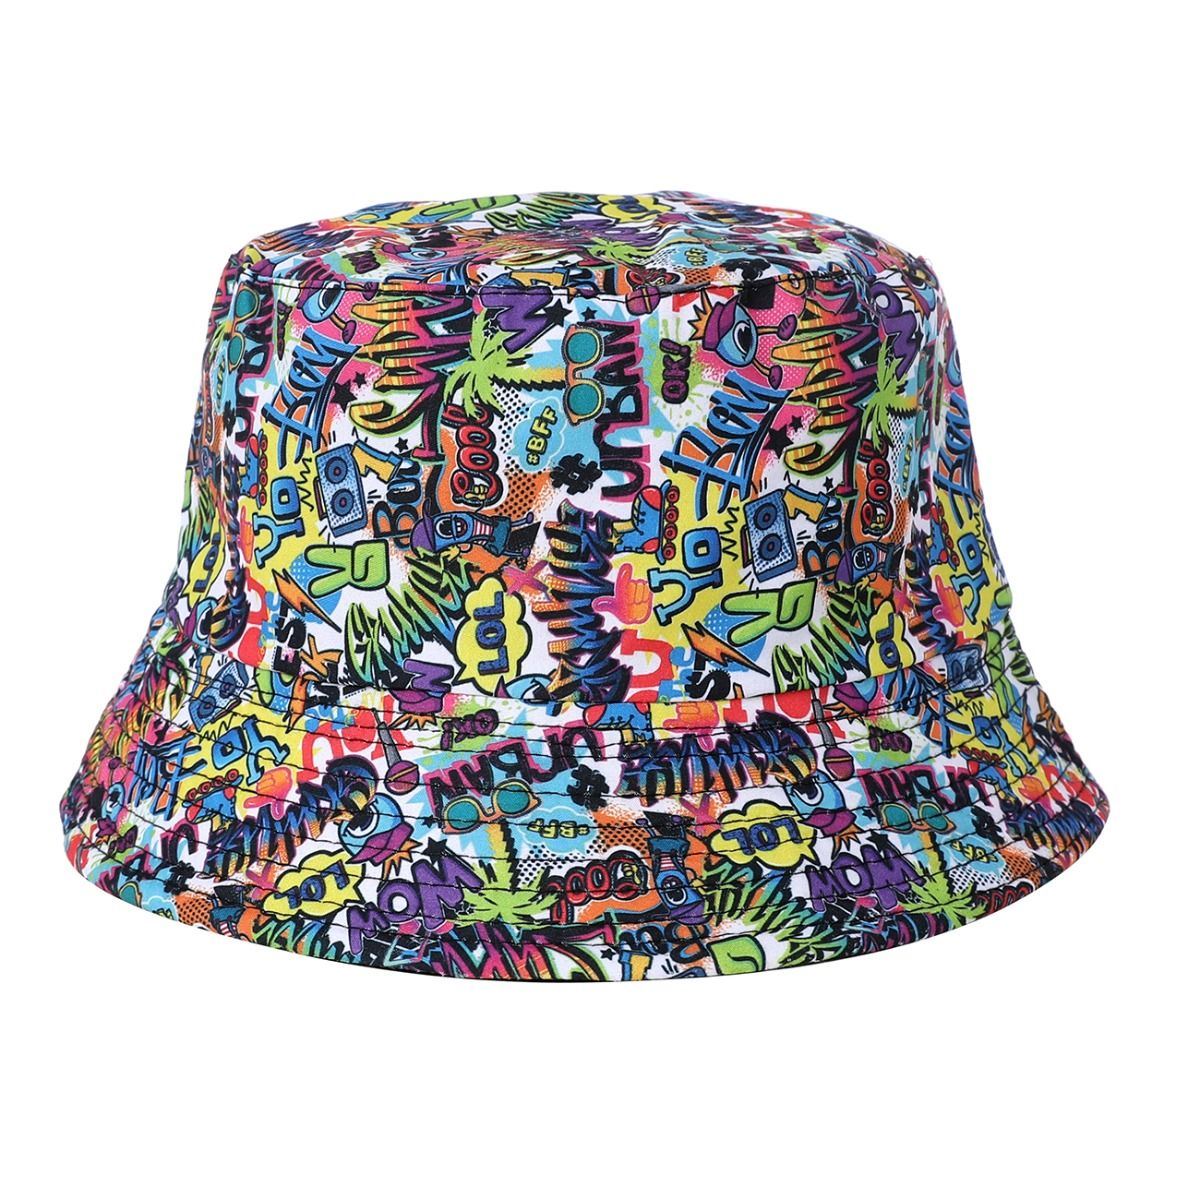 Cartoon Print Bucket Hat Colourful Urban Graffiti Summer Festival Sun Holiday